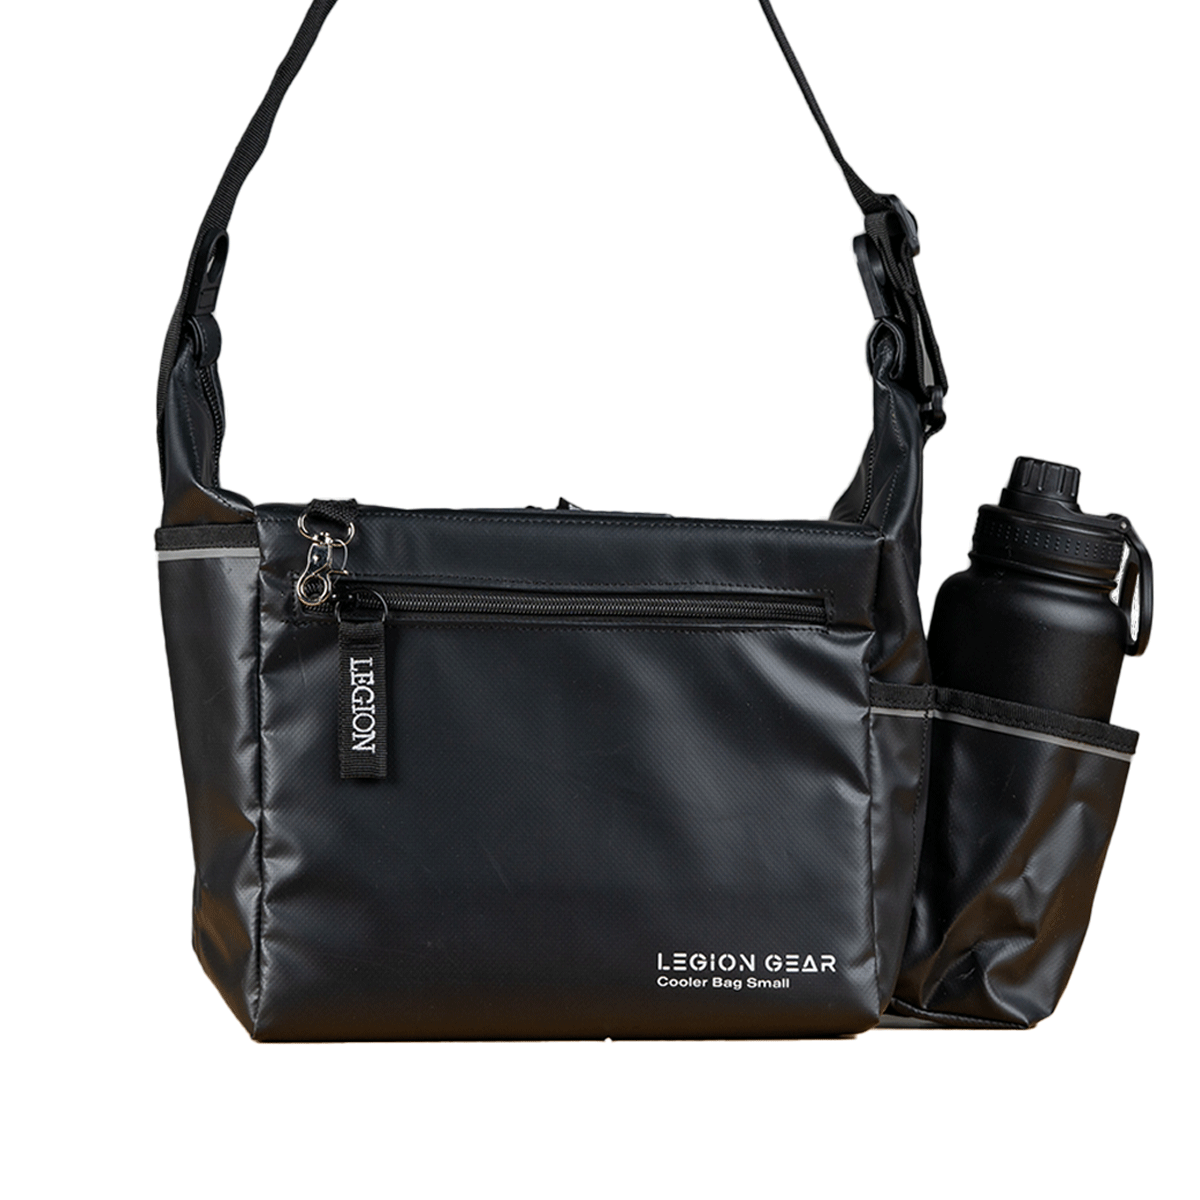 Legion Gear Insulated Cooler Bag Large - Black